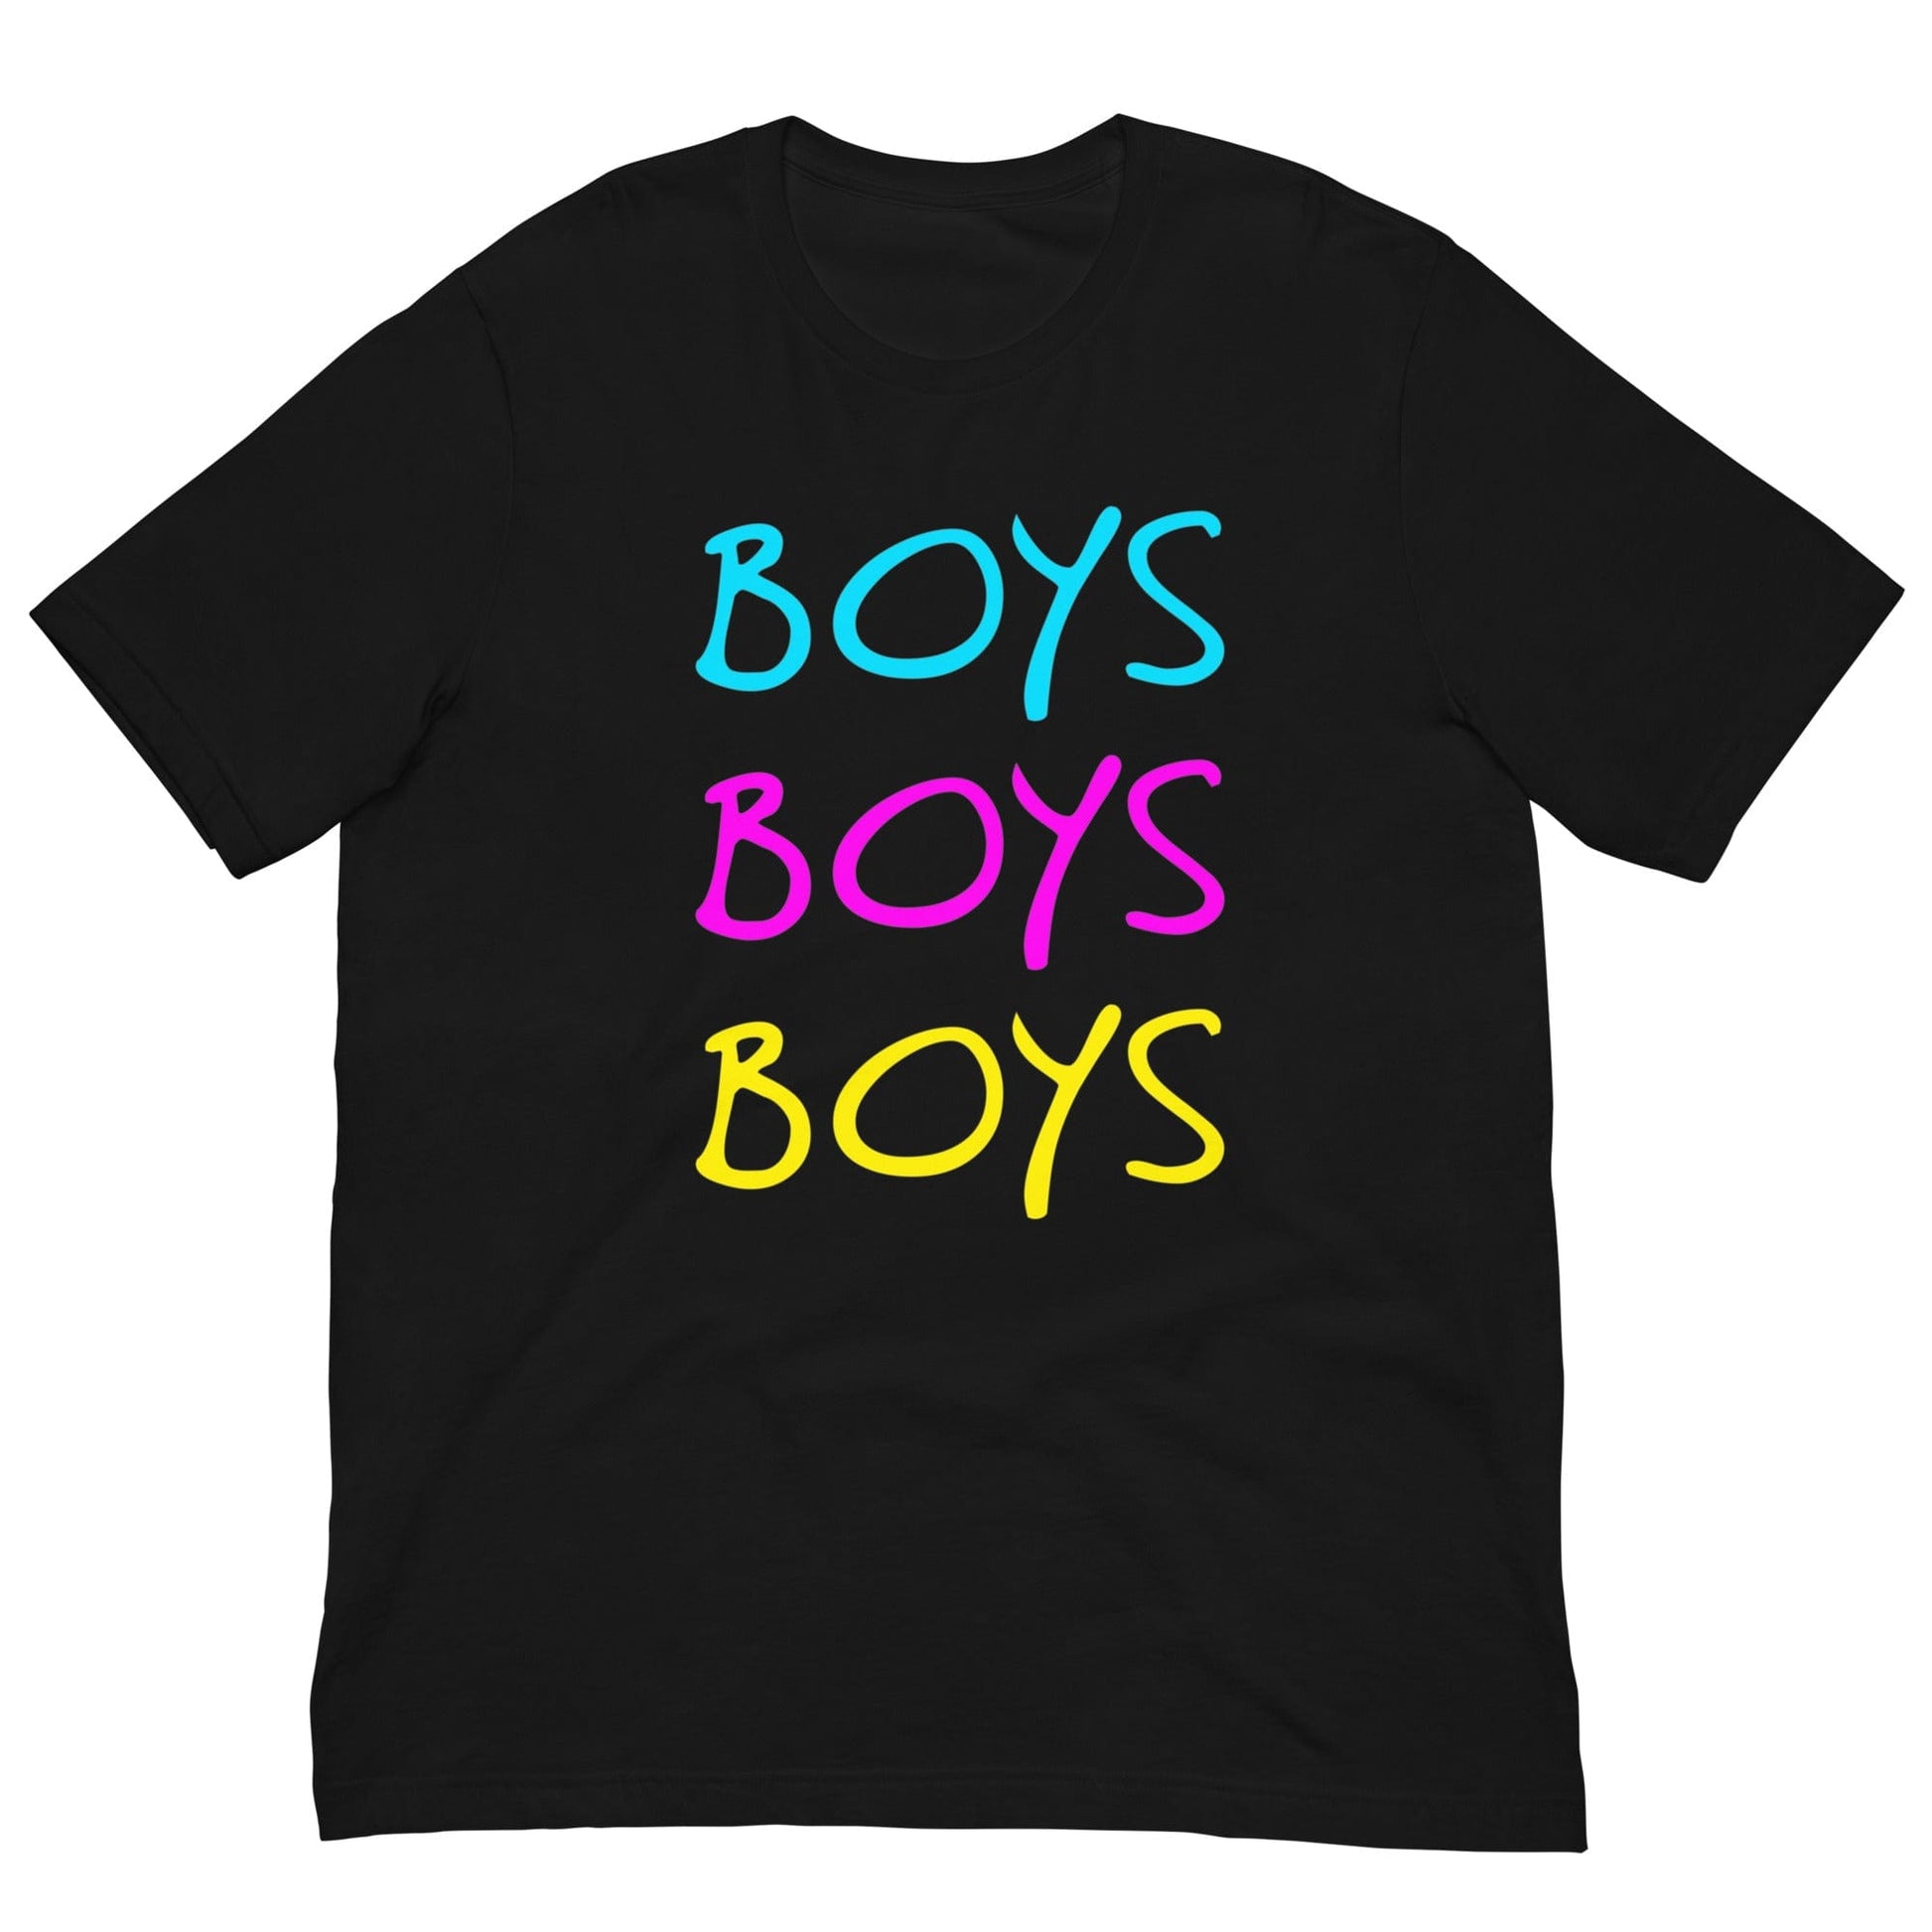 Boys, Boys, Boys LGBT Love T-shirt Black / XS